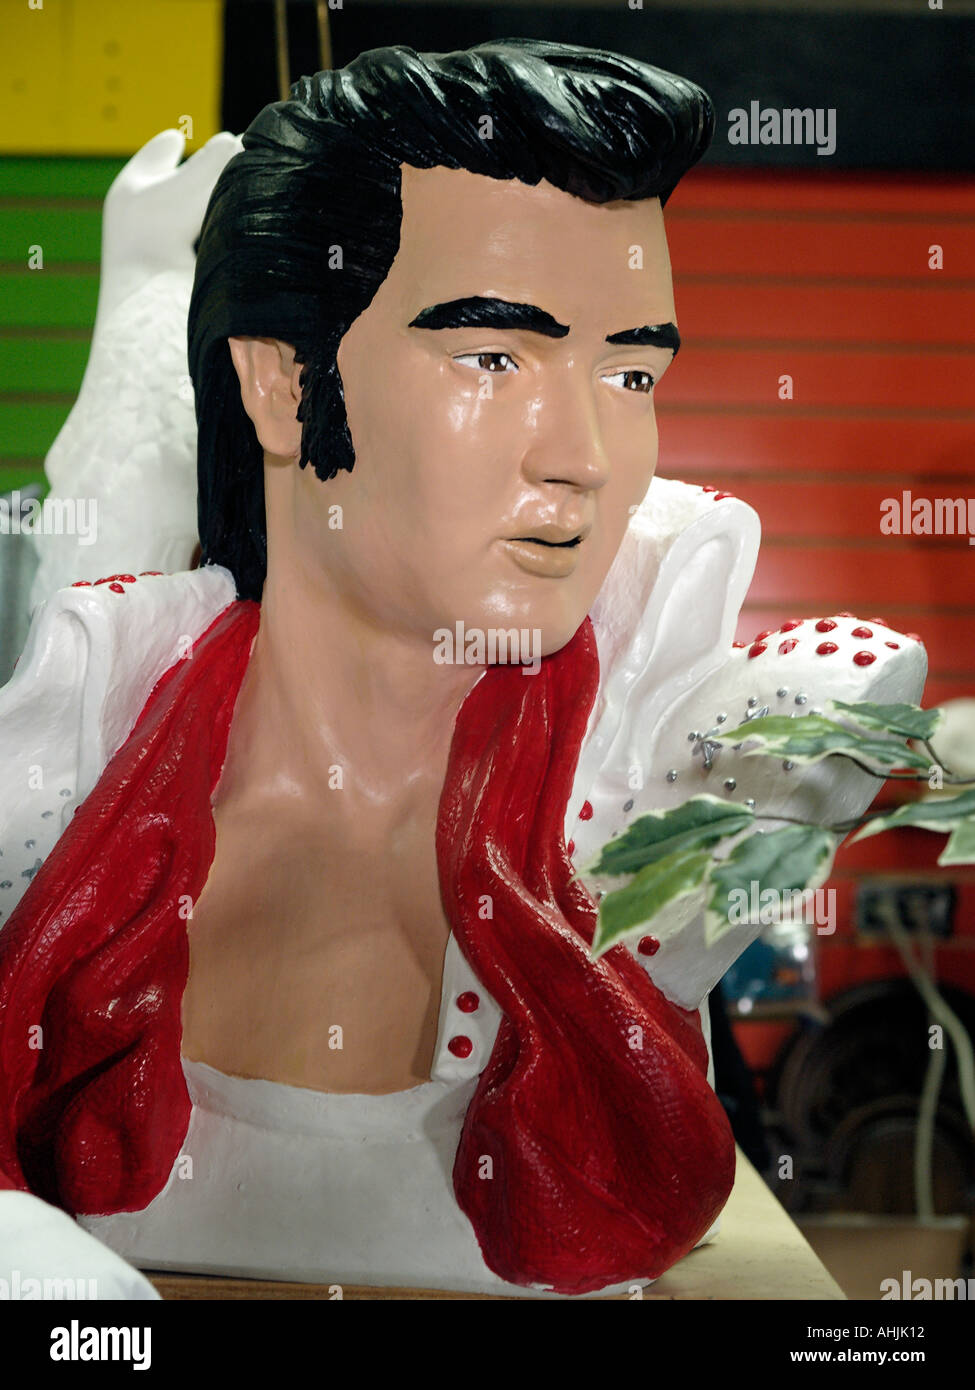 Plaster bust of Elvis Presley found in a flea market Stock Photo